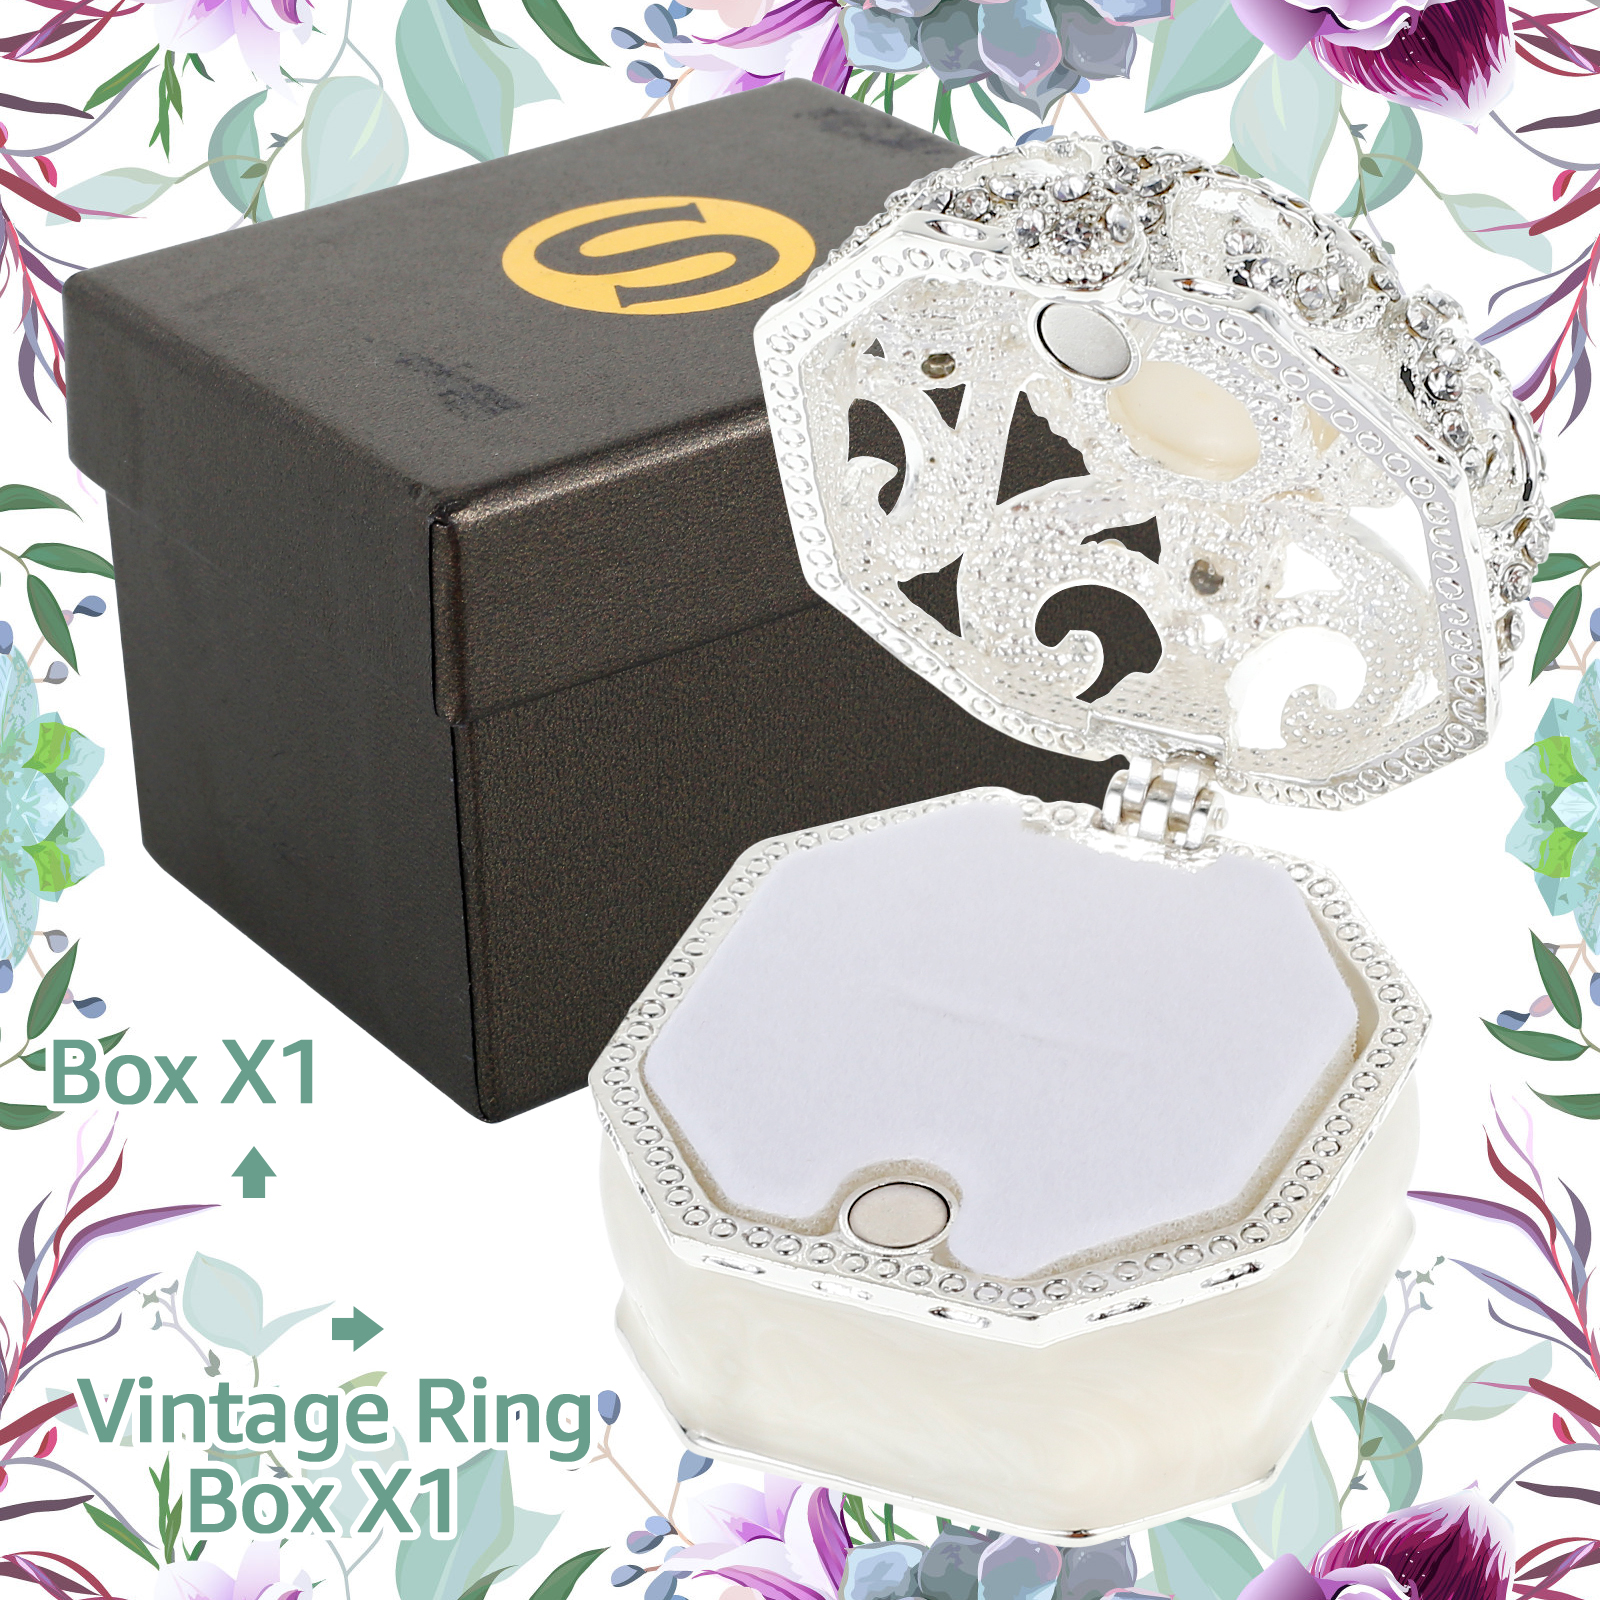 Welpettie Crystal Vintage Jewelry Box, Antique Crown Design Trinket  Treasure Chest Storage Organizer,Metal Earrings/Necklace/Ring Holder Case,  Keepsake Giftb Box for Girls Women